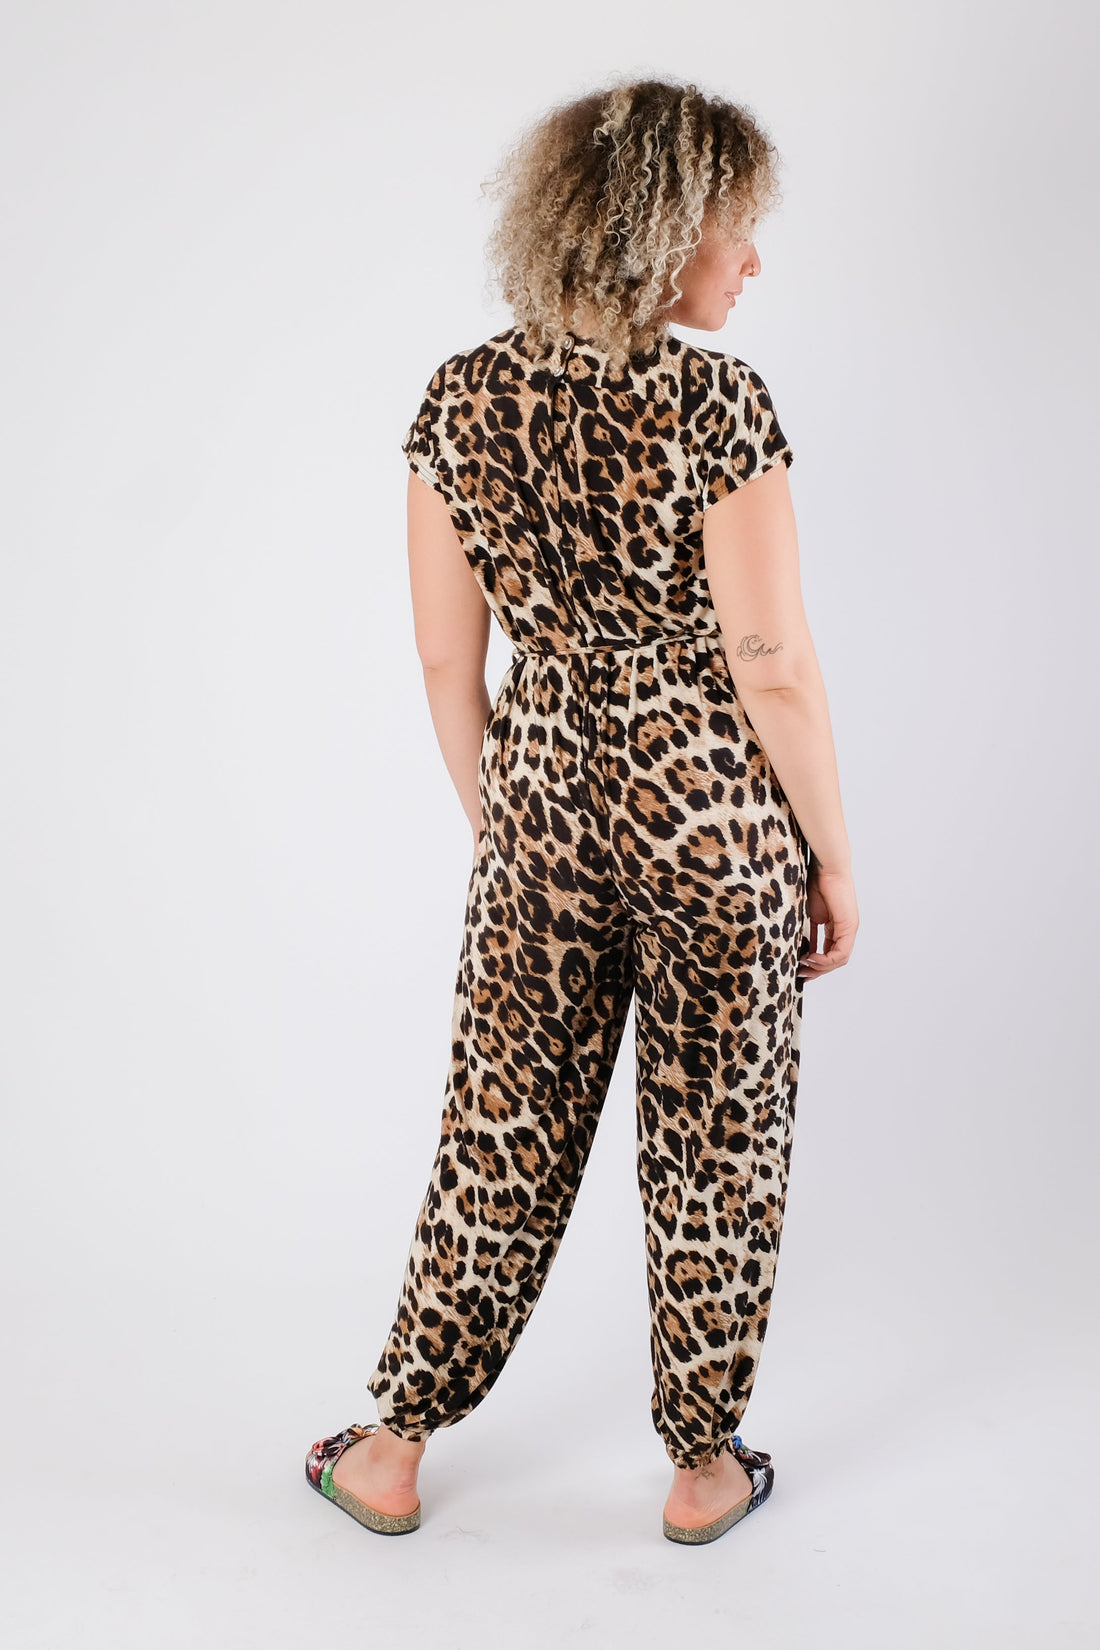 Shaya - Leopard Print Tie Waist Jumpsuit - Pinstripe